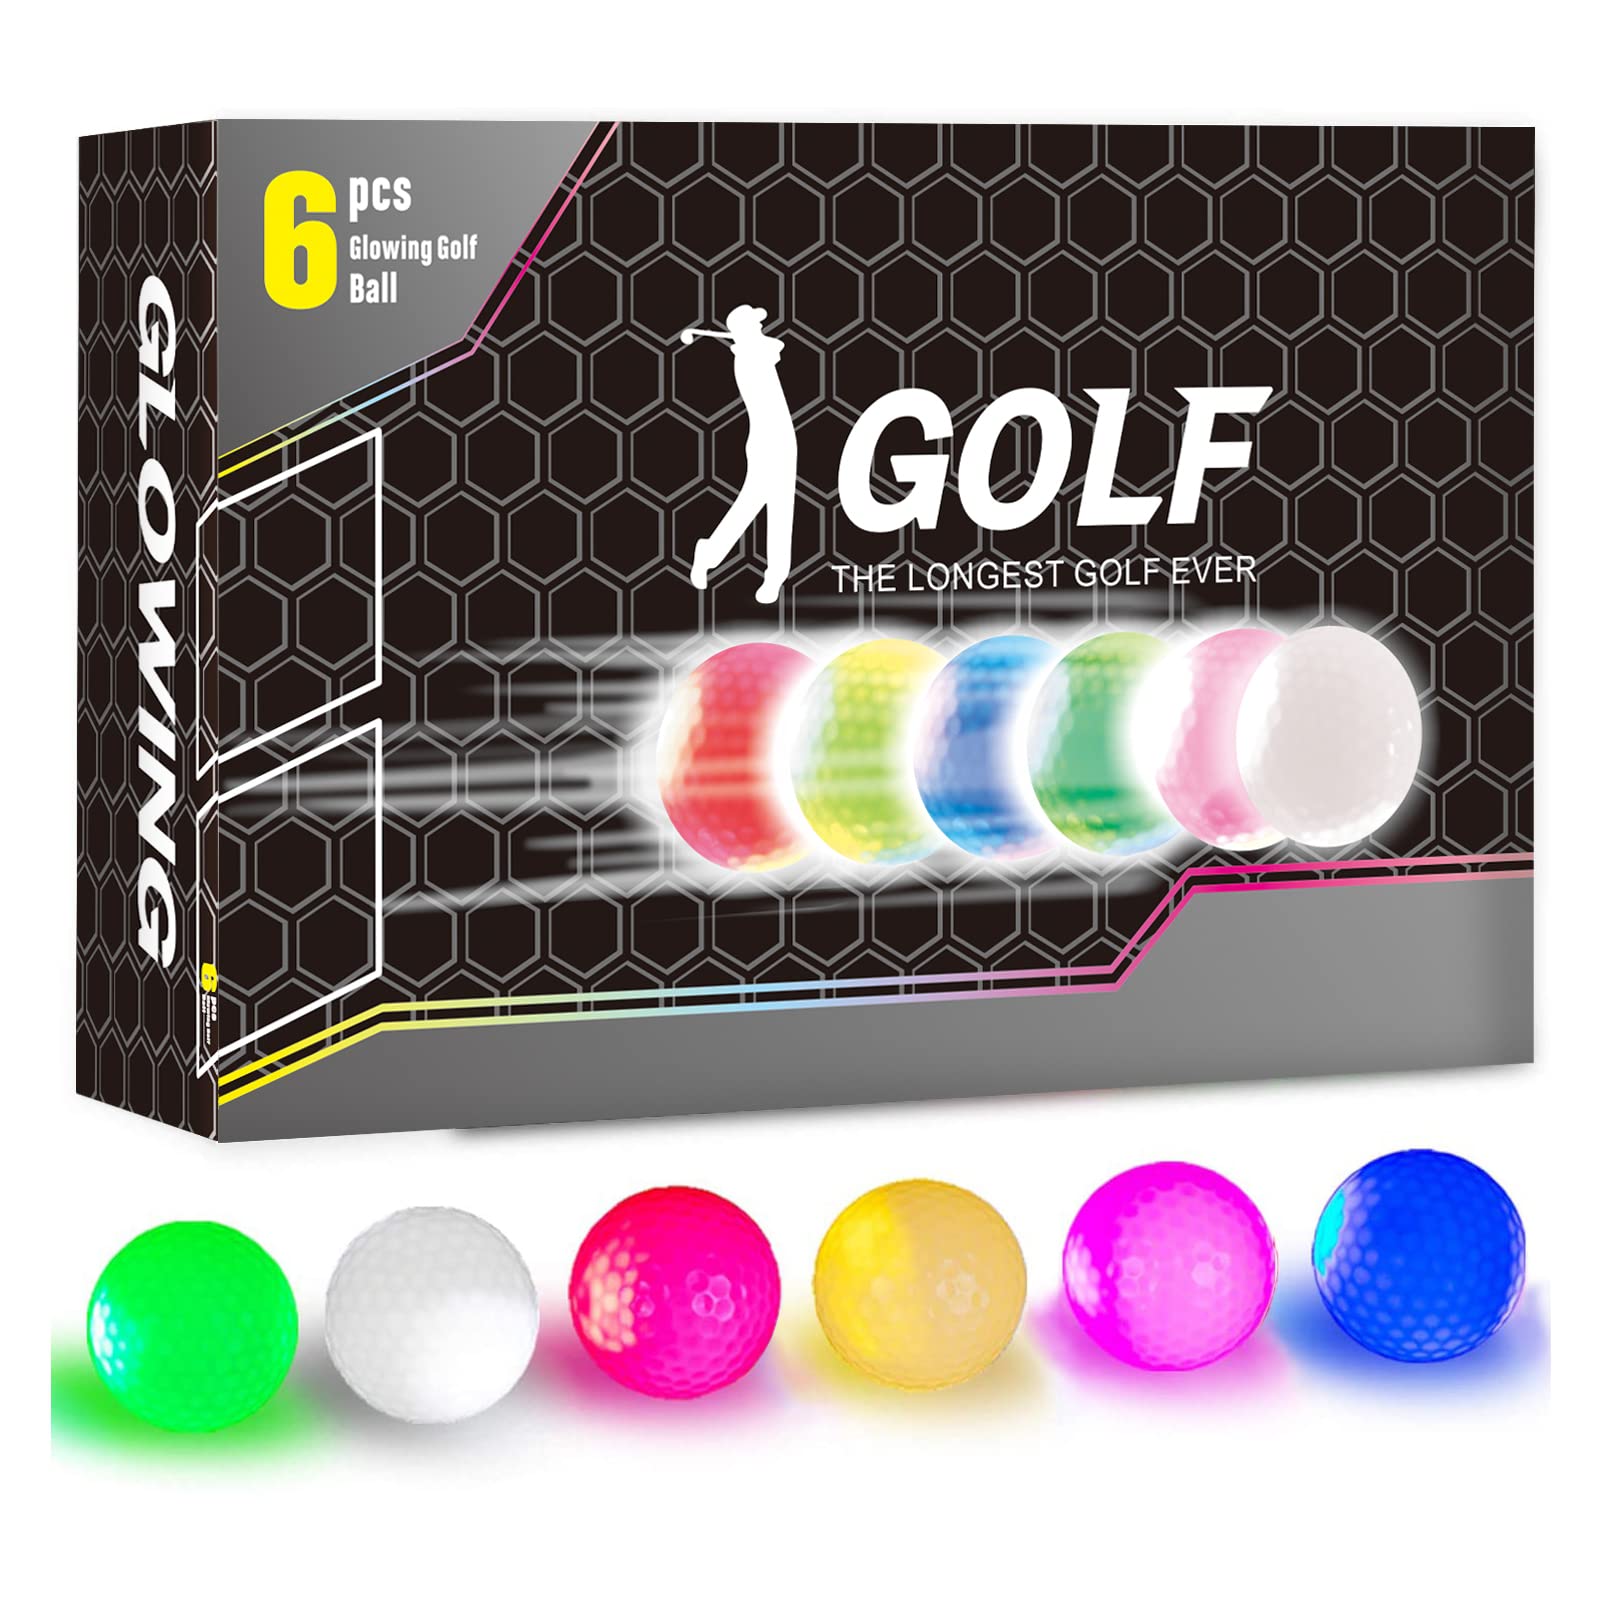 VTRETU Glow in the Dark Golf Balls